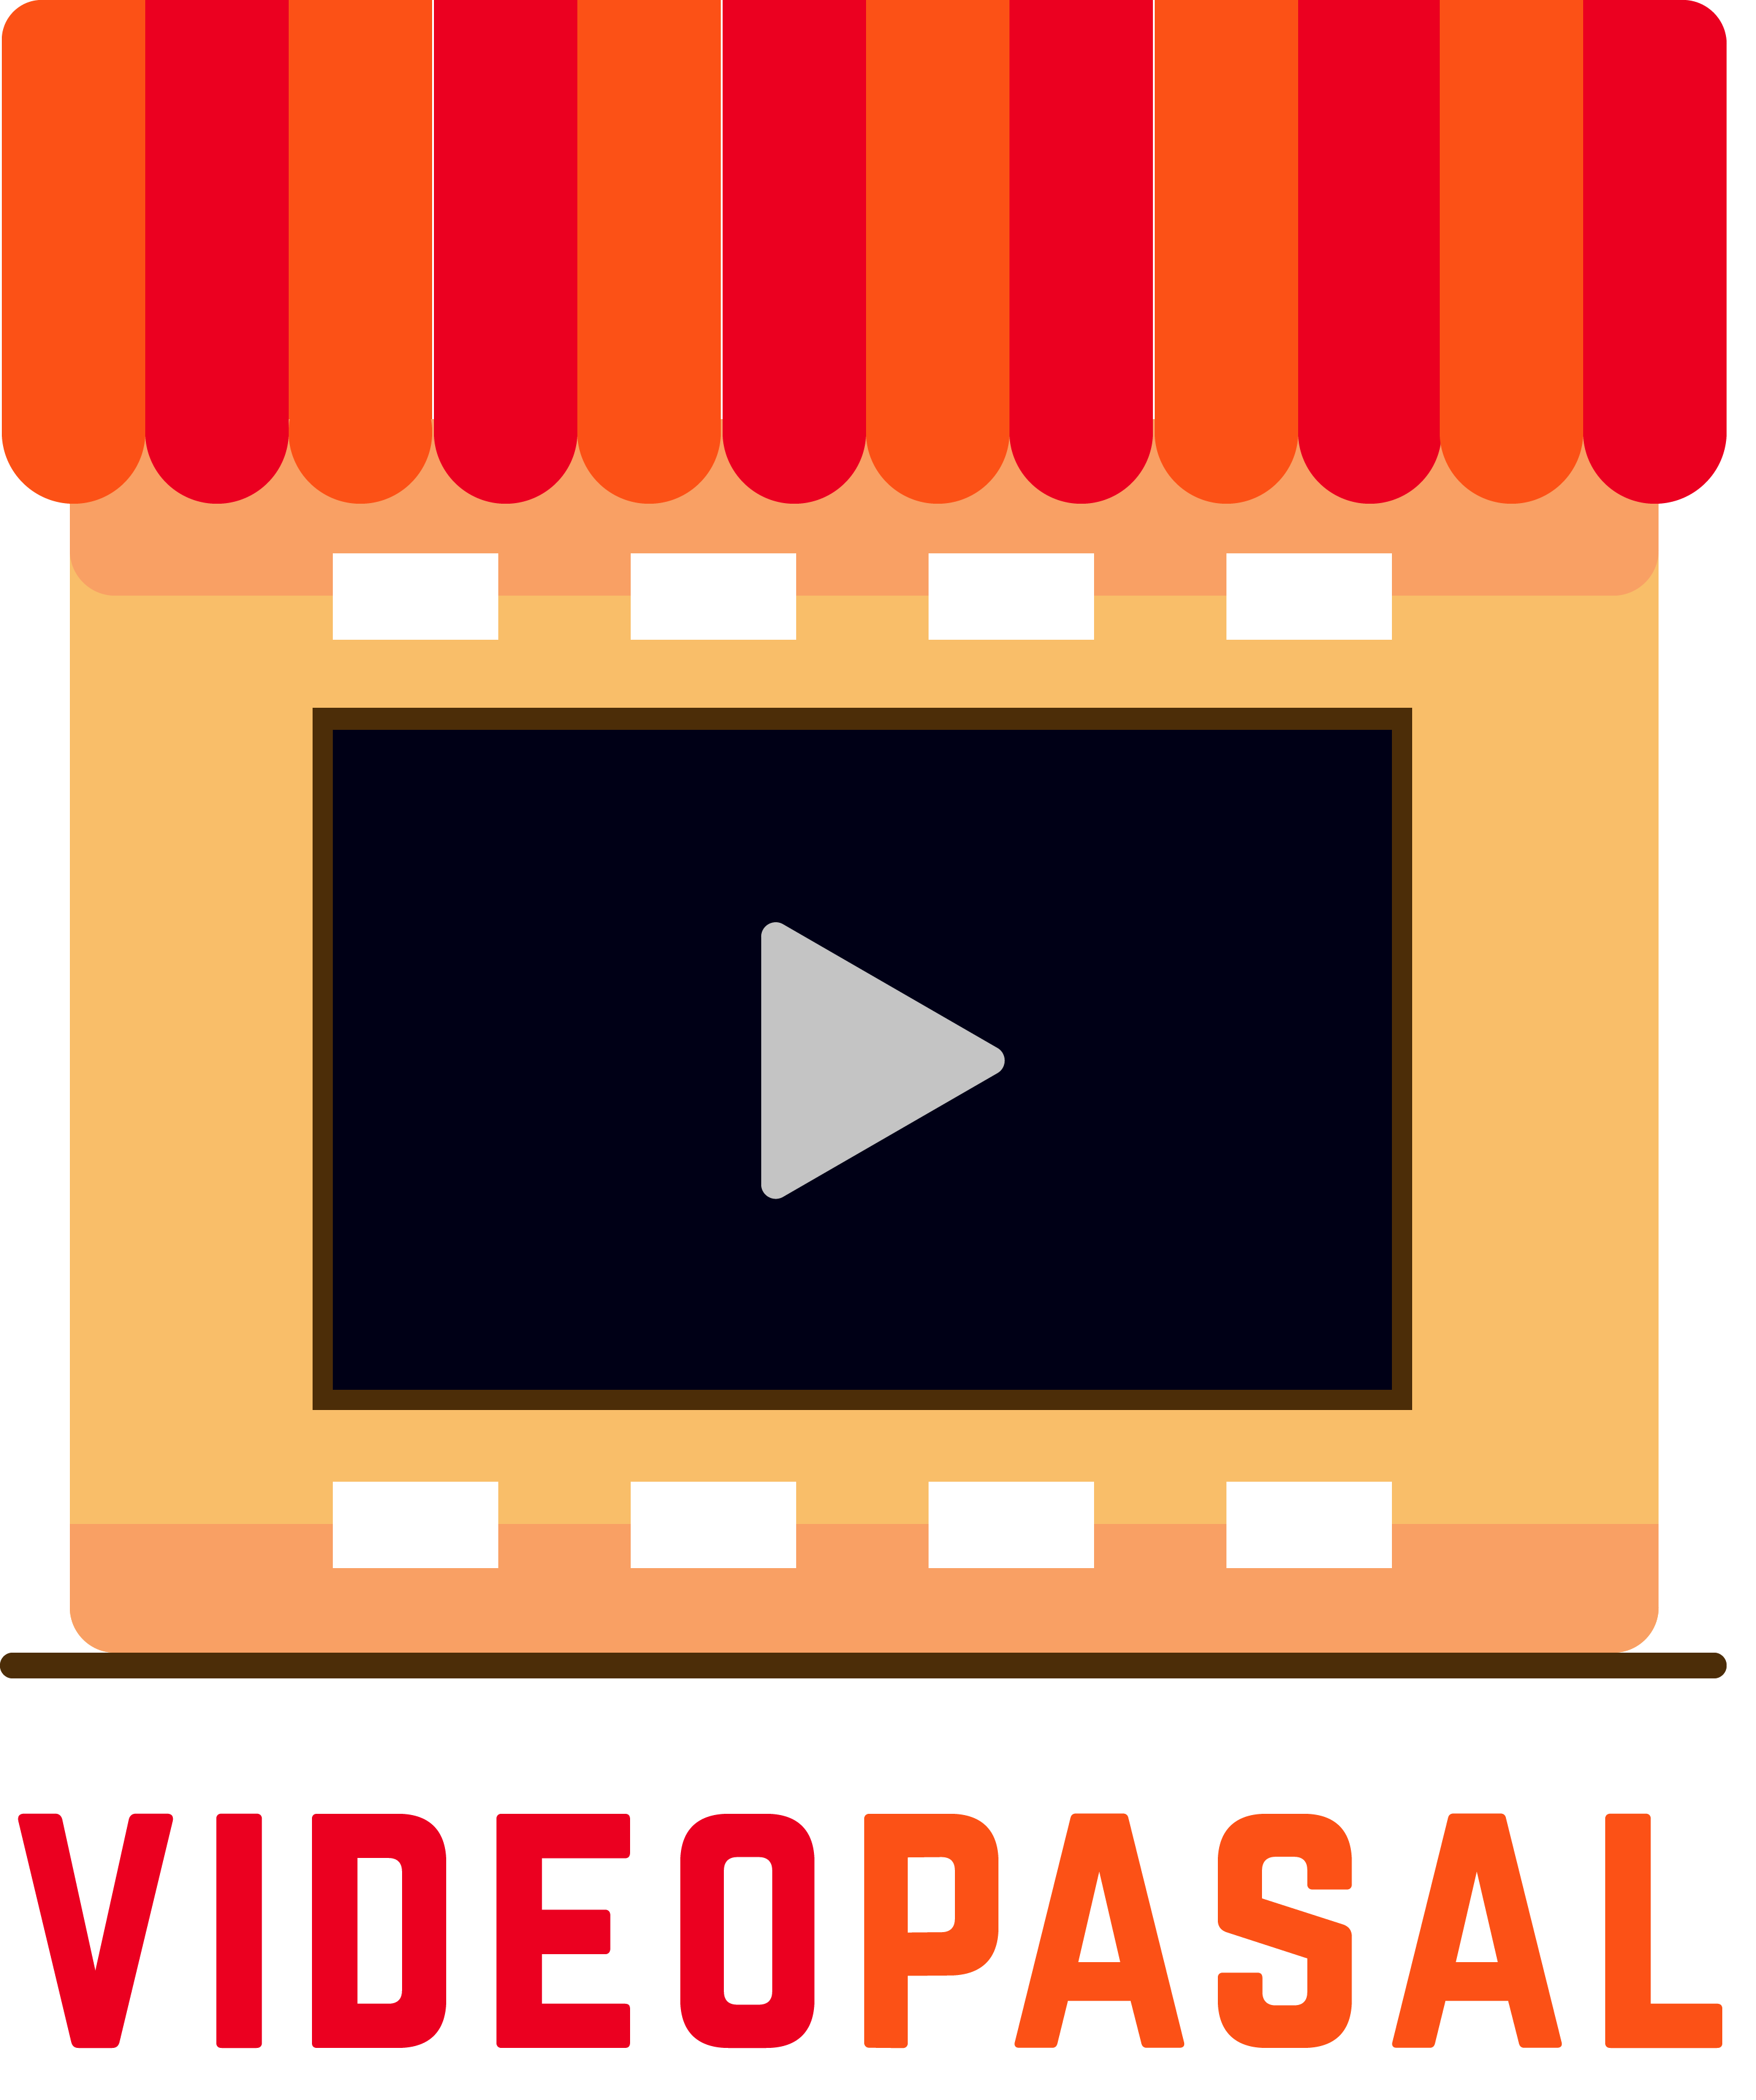 Watch Jhingedau at Video Pasal